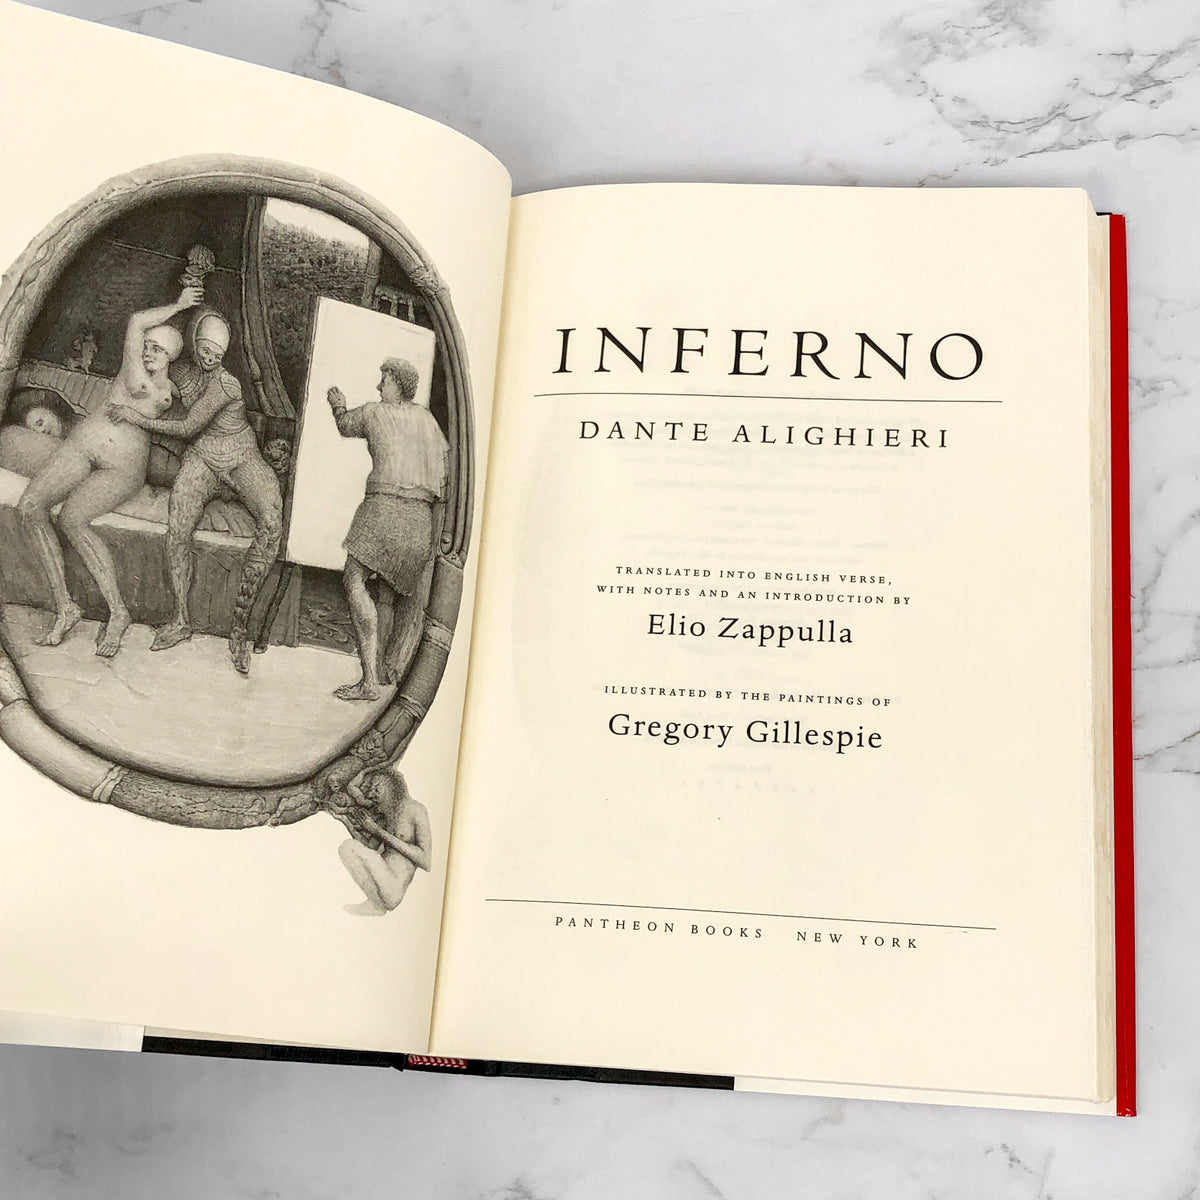 Inferno by Dante Alighieri - A New Verse Translation by Elio Zappulla